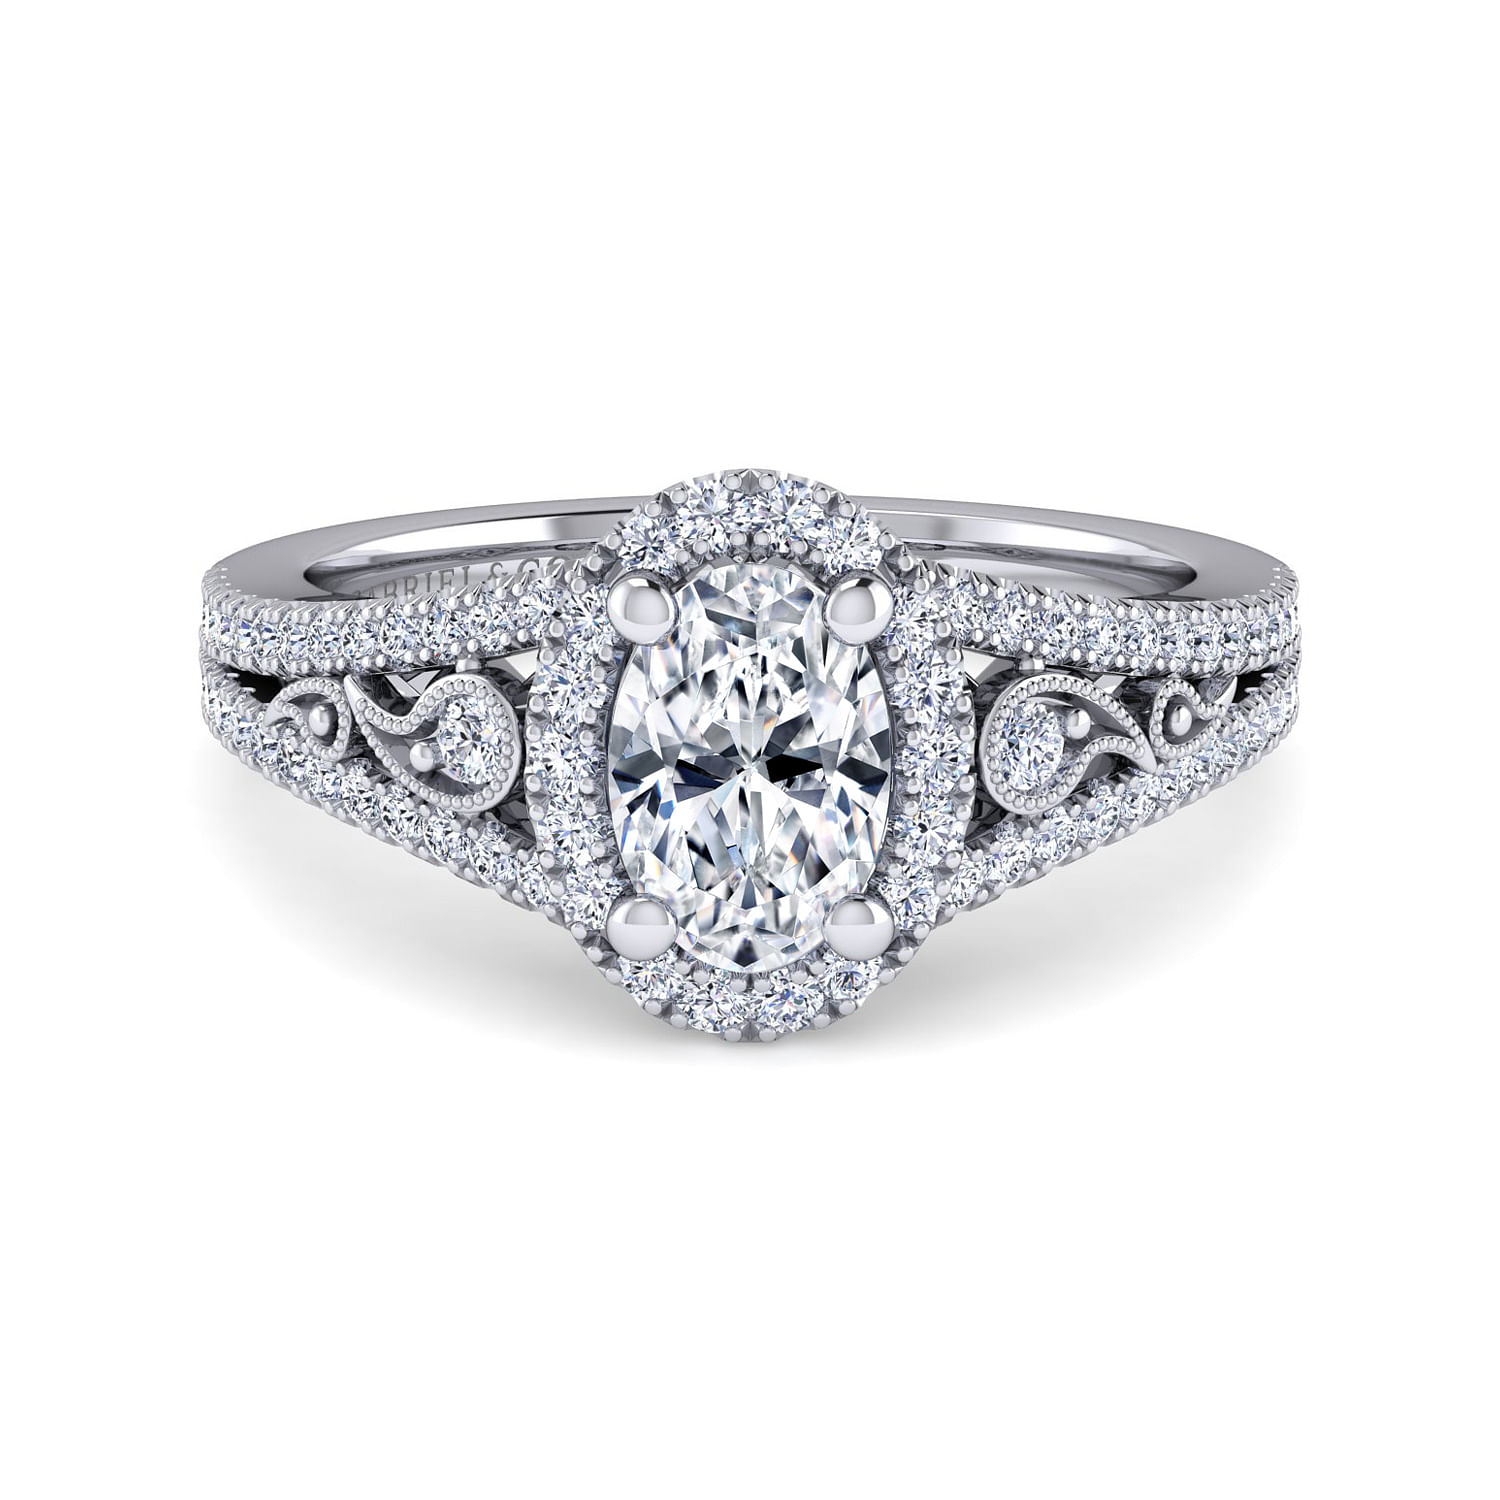 Marlena - Vintage Inspired Platinum Oval Halo Diamond Engagement Ring